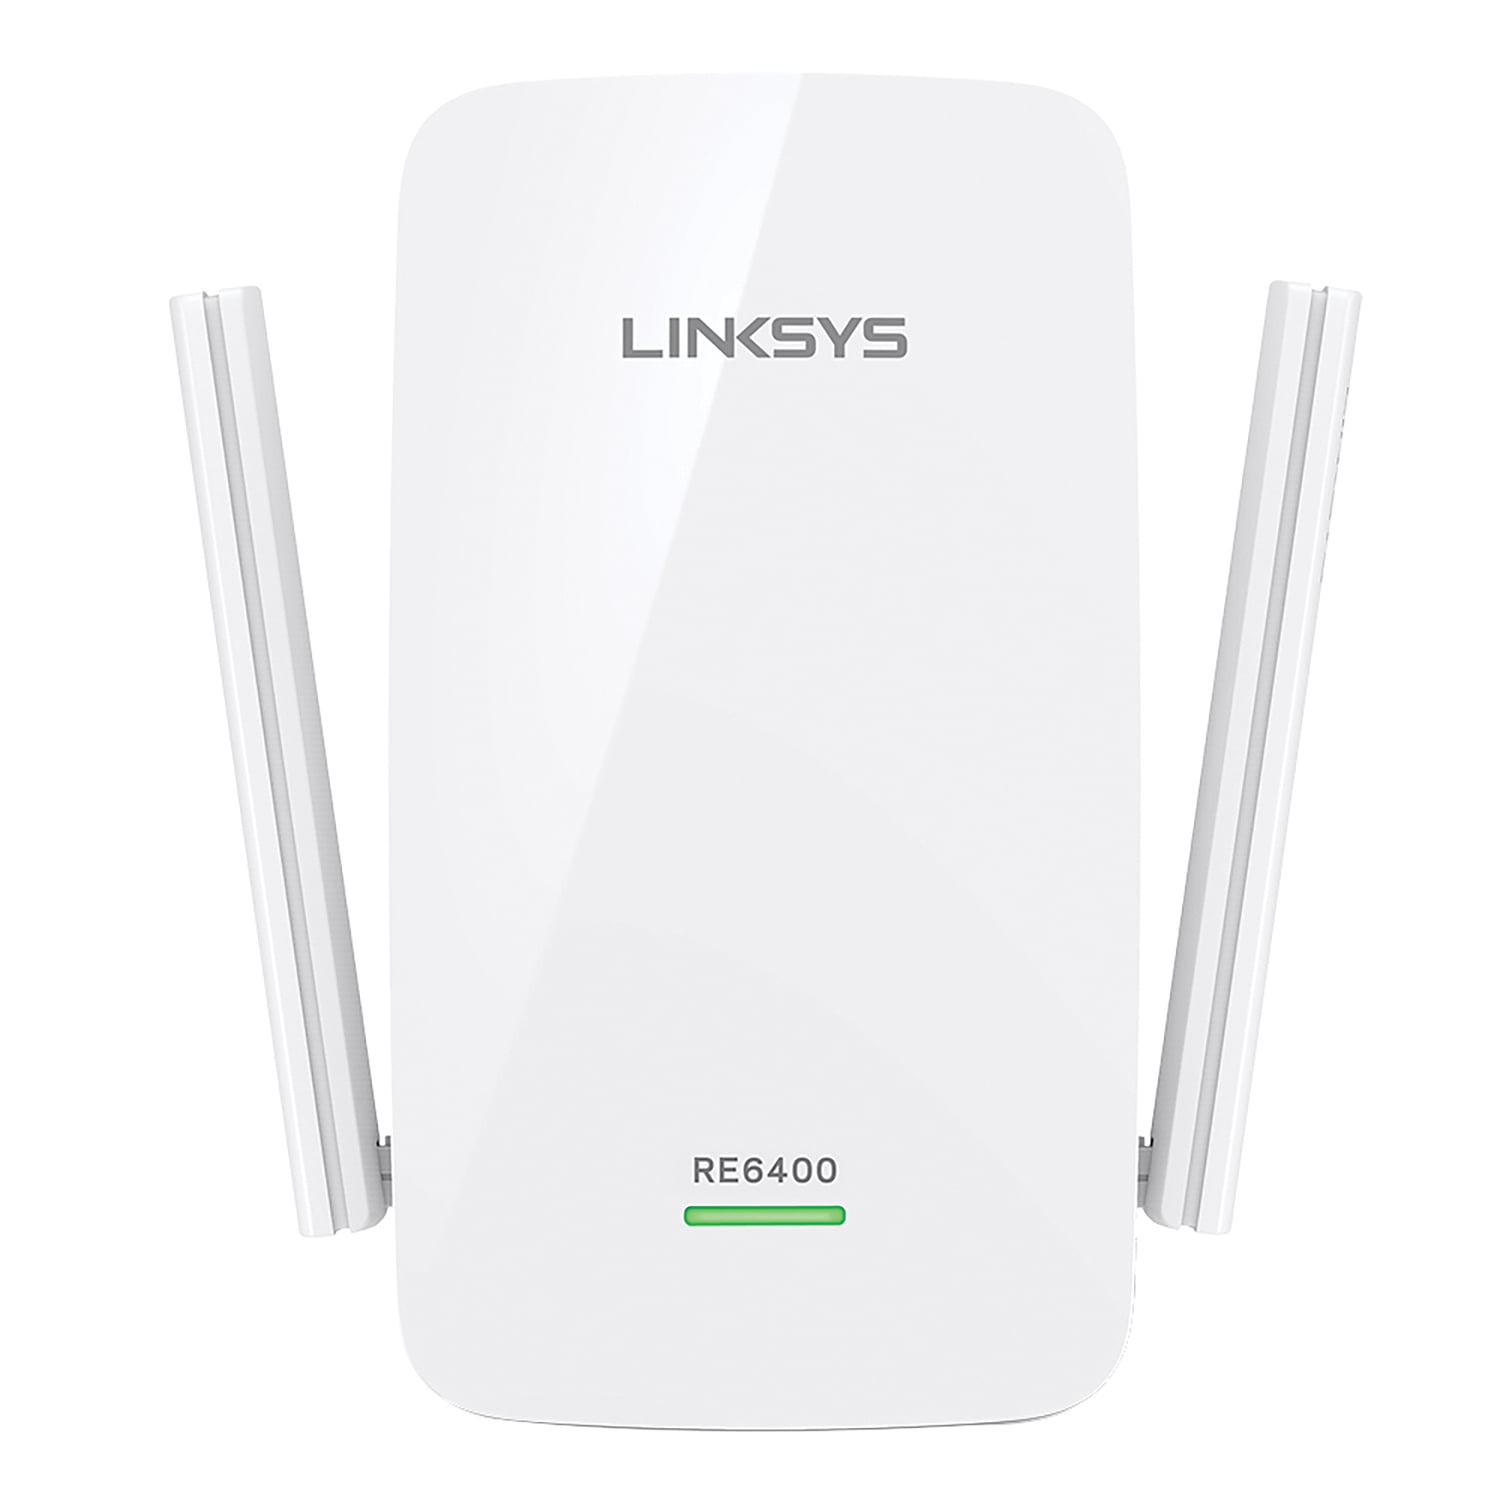 Gemme travl hellige Linksys AC1200 Dual Band BOOST WiFi Extender, White (RE6400) - Walmart.com